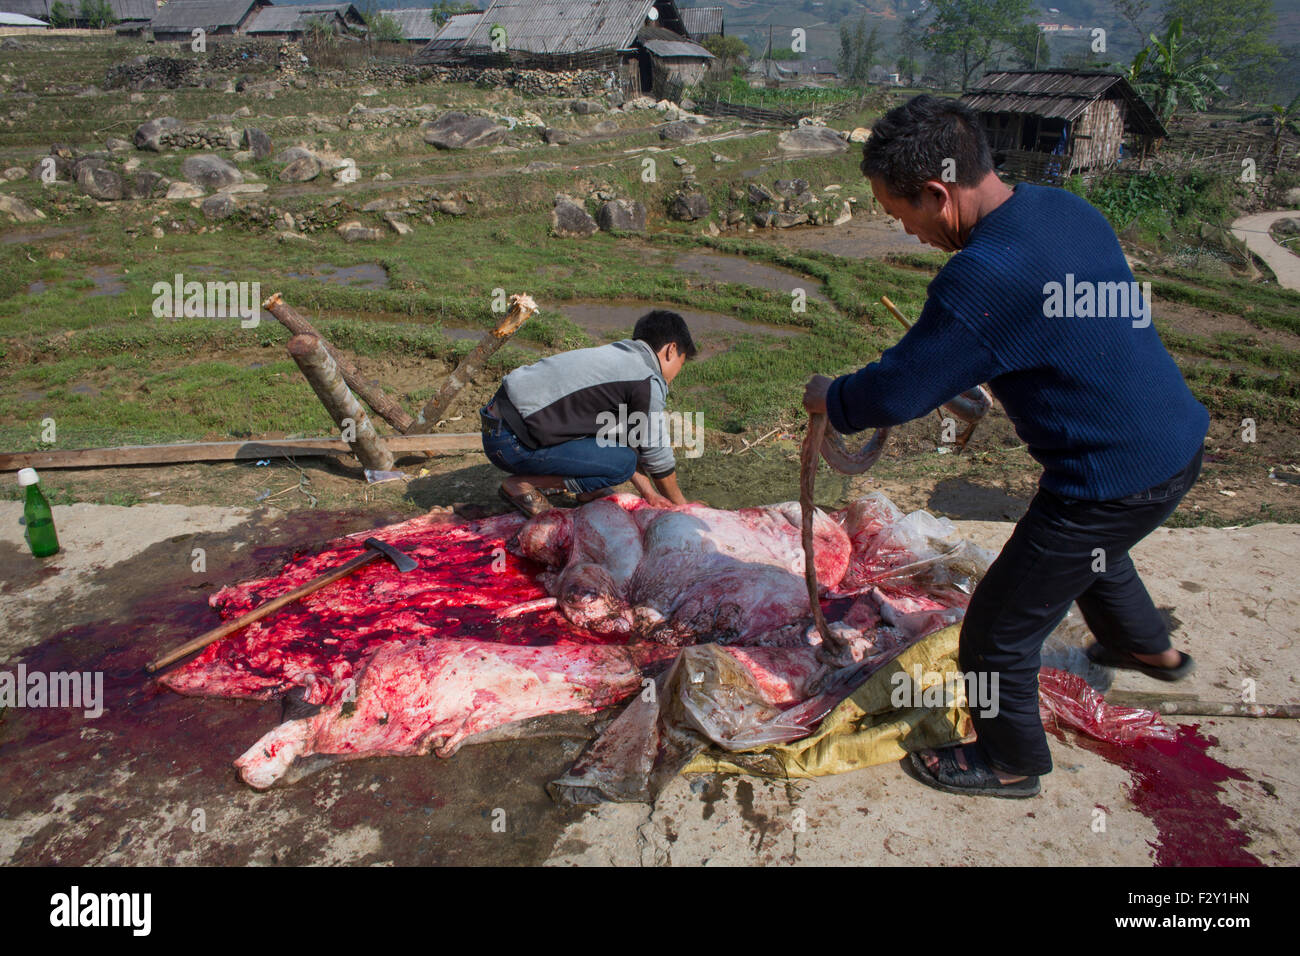 Vietnamese men slaughtering a cow Stock Photo